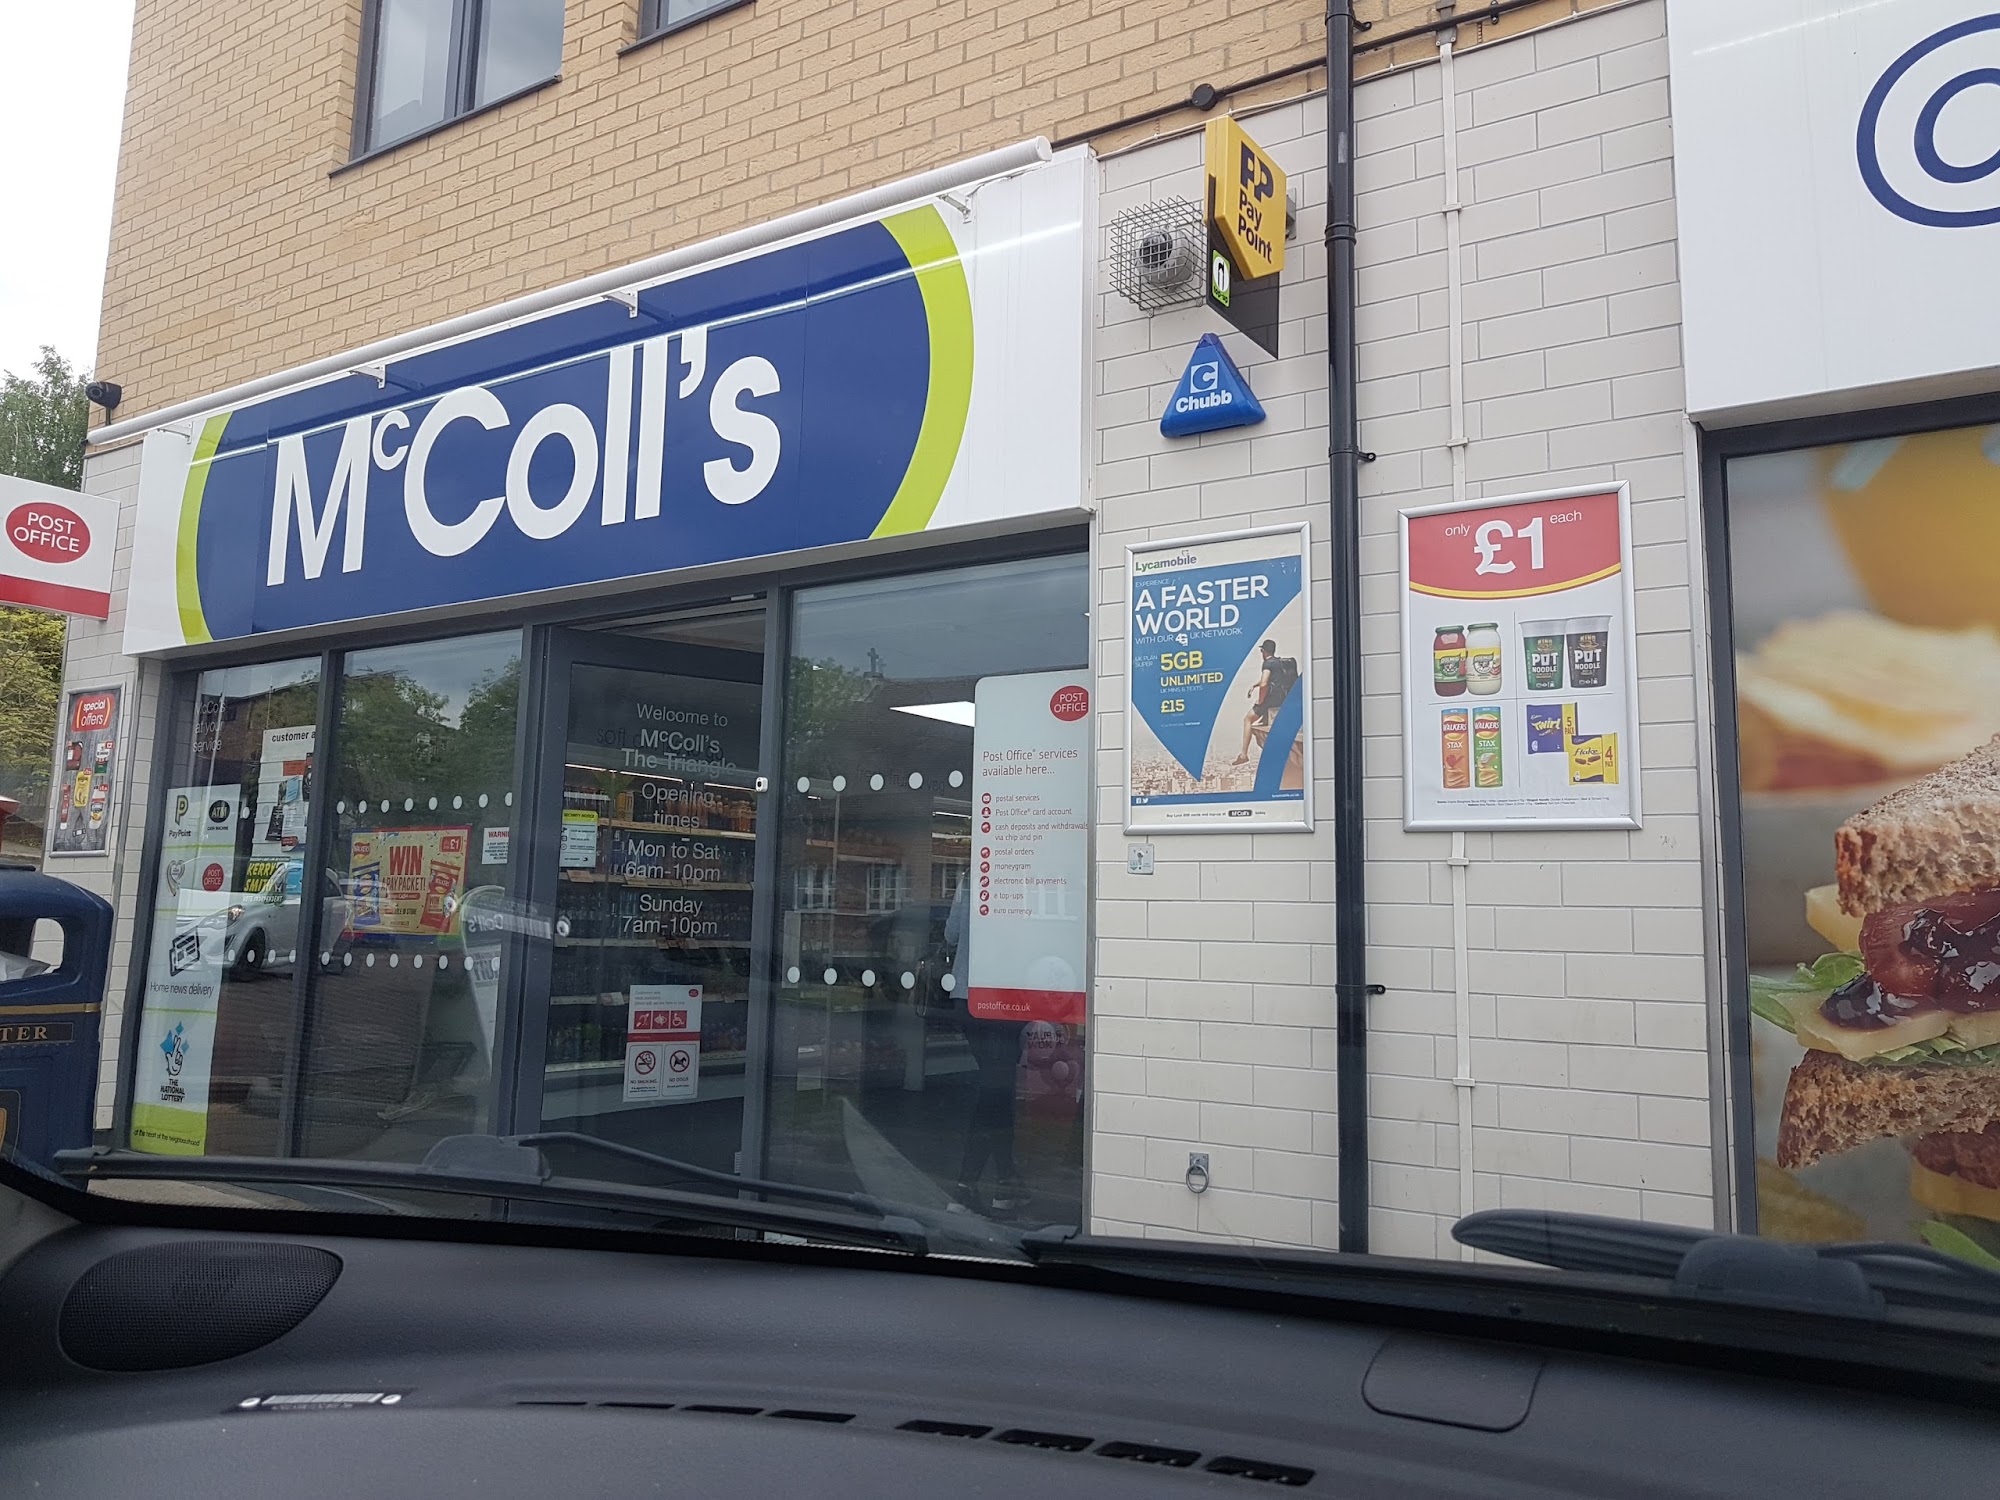 McColl's